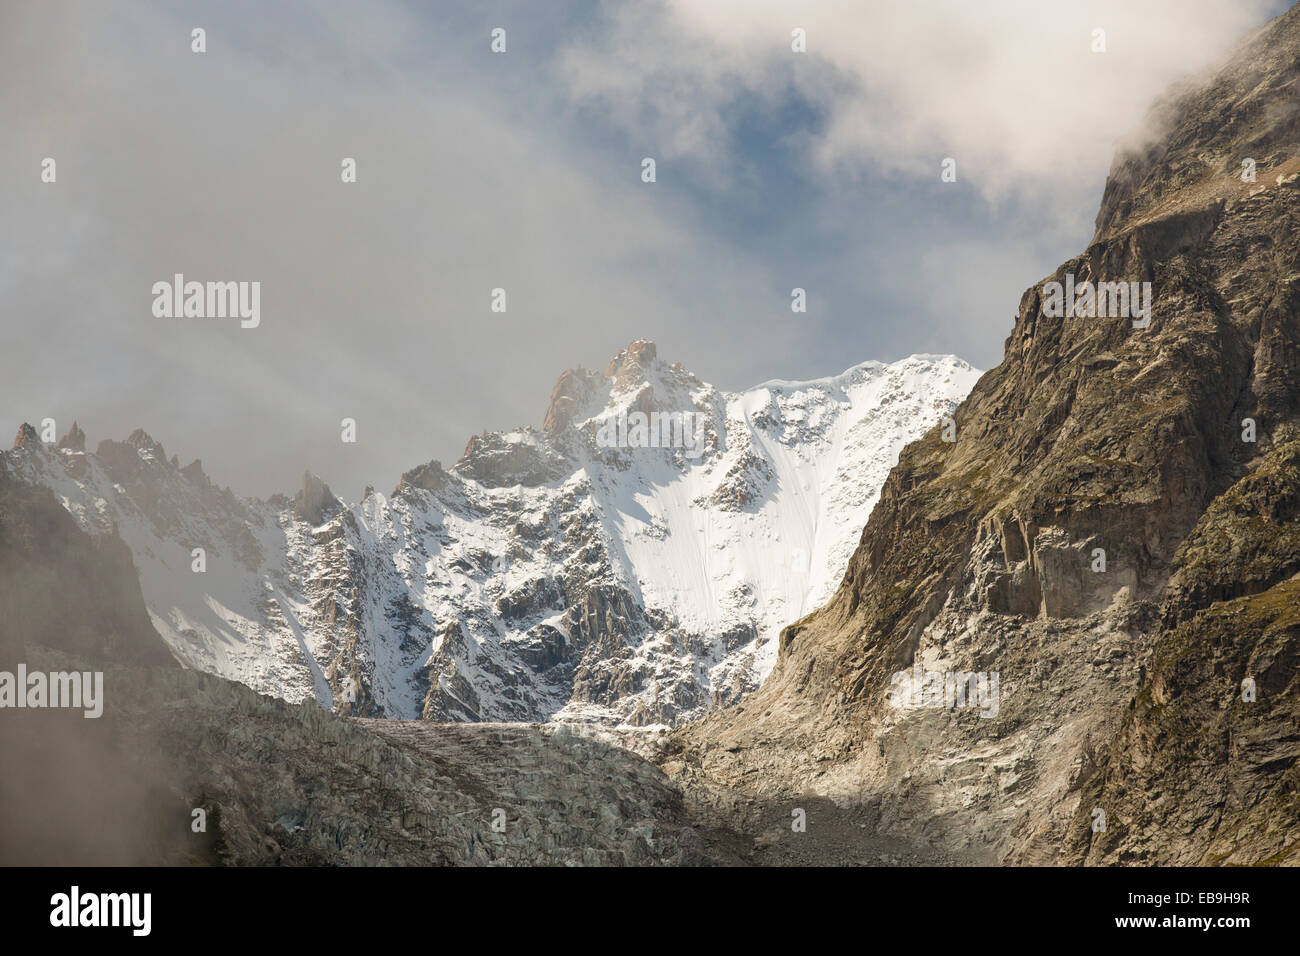 The rapidly receding Glacier de Saleina, on the Aiguille du Chardonnet above Val Ferret in the Swiss Alps. Stock Photo